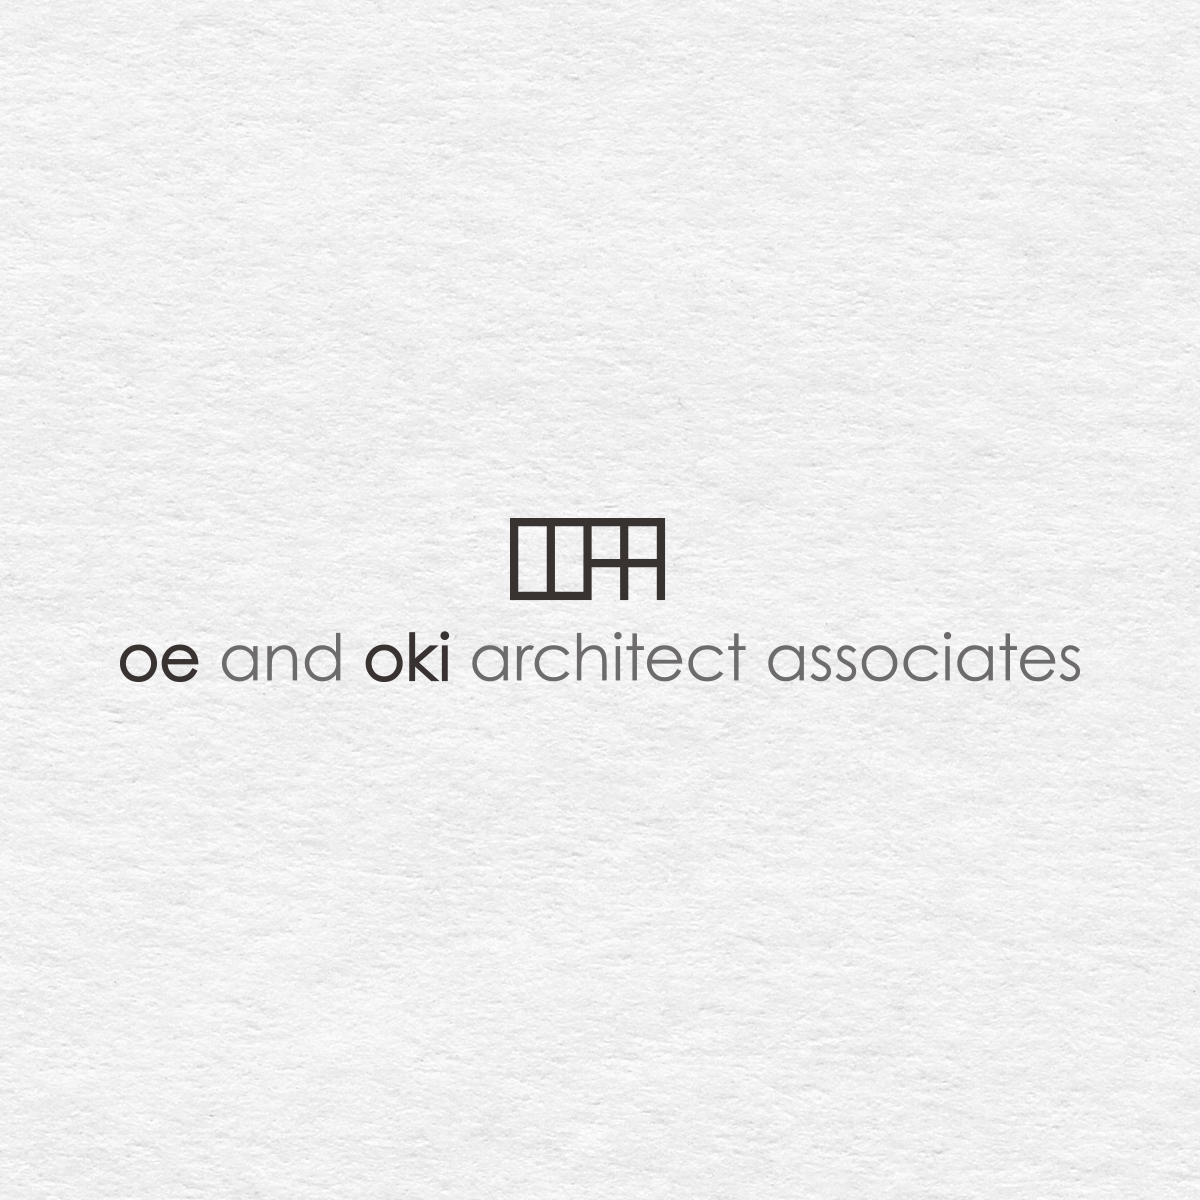 oe and oki architect associates